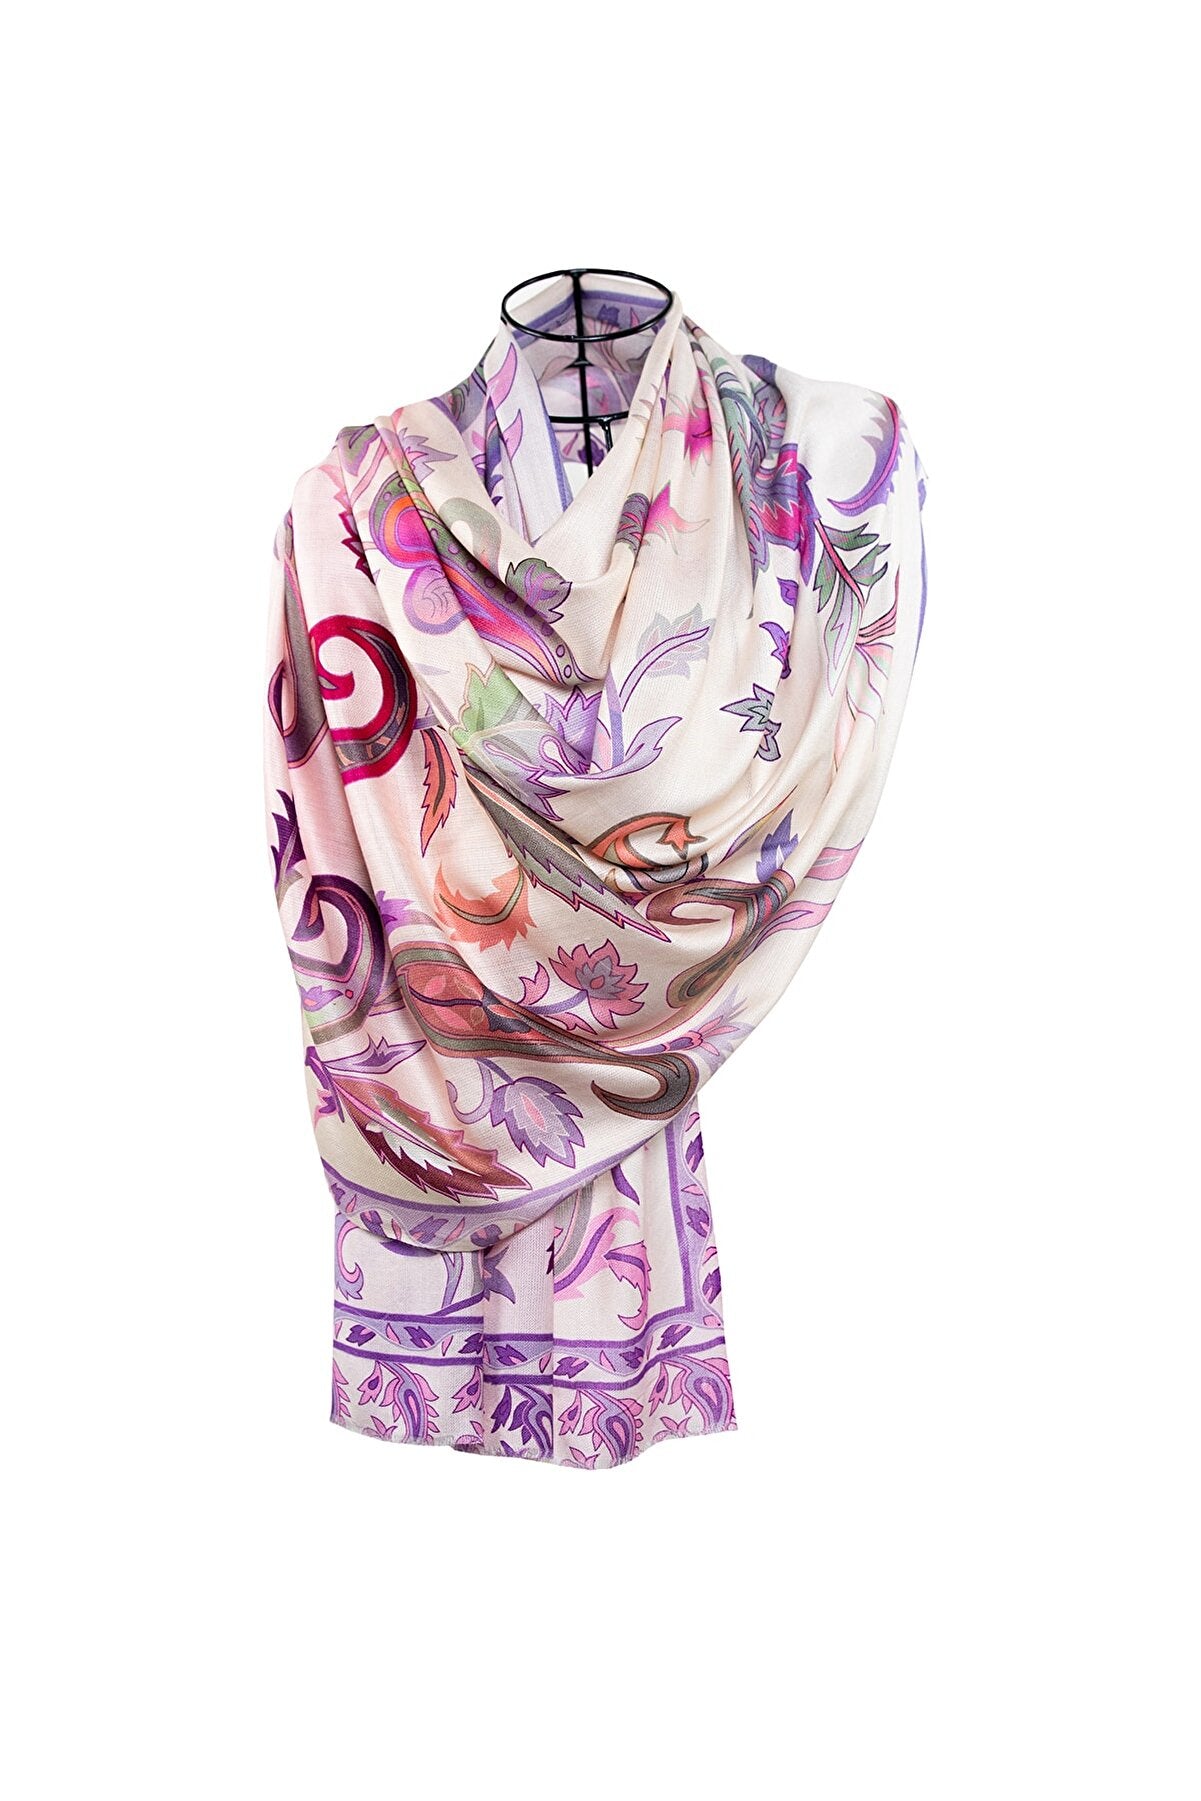 Vivid Prints Modal Silk Scarves - Gentle Paisley